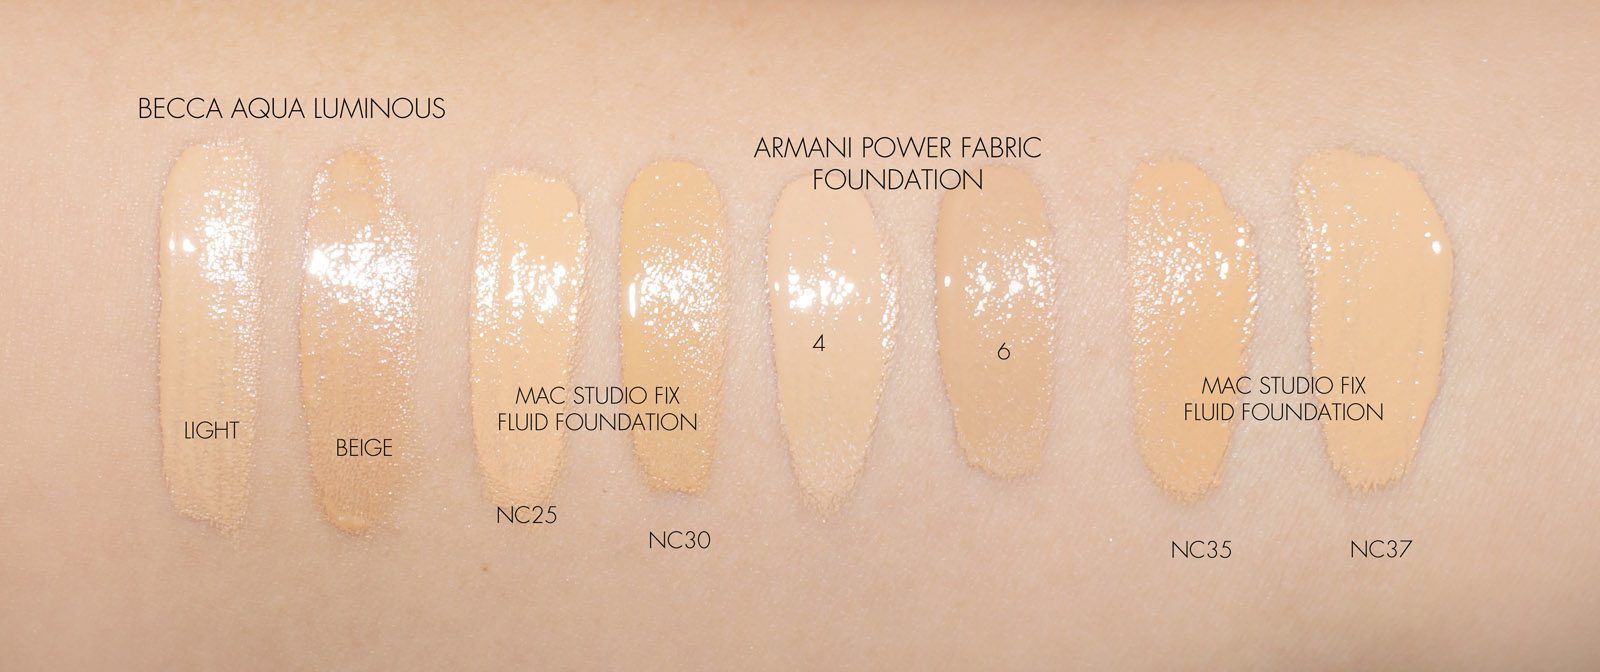 armani power fabric full coverage foundation